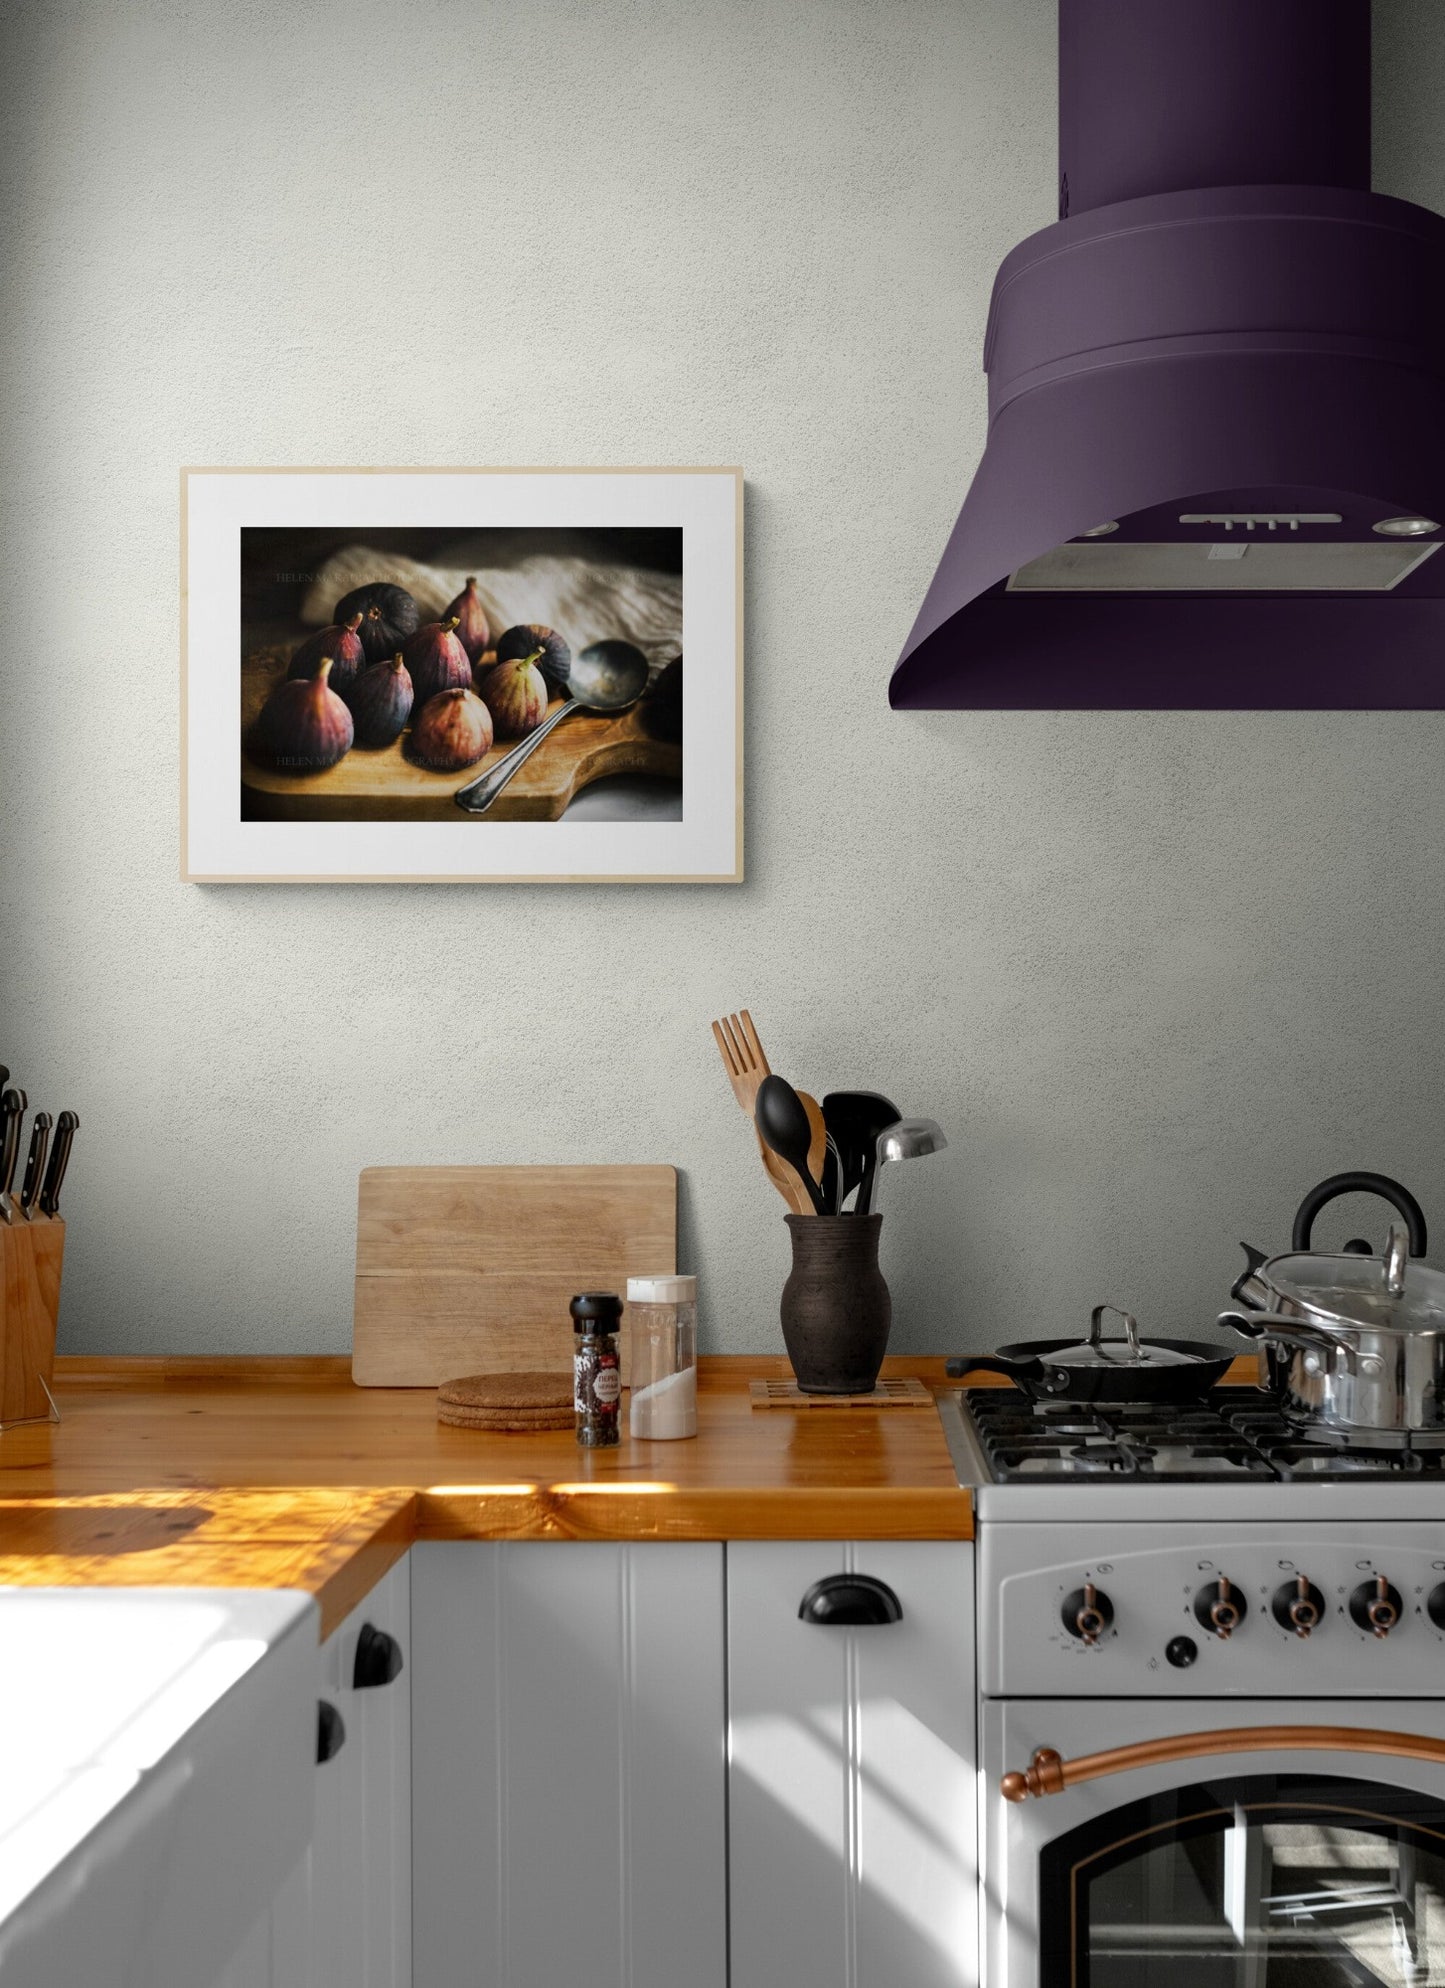 figs photograph print as kitchen wall art 